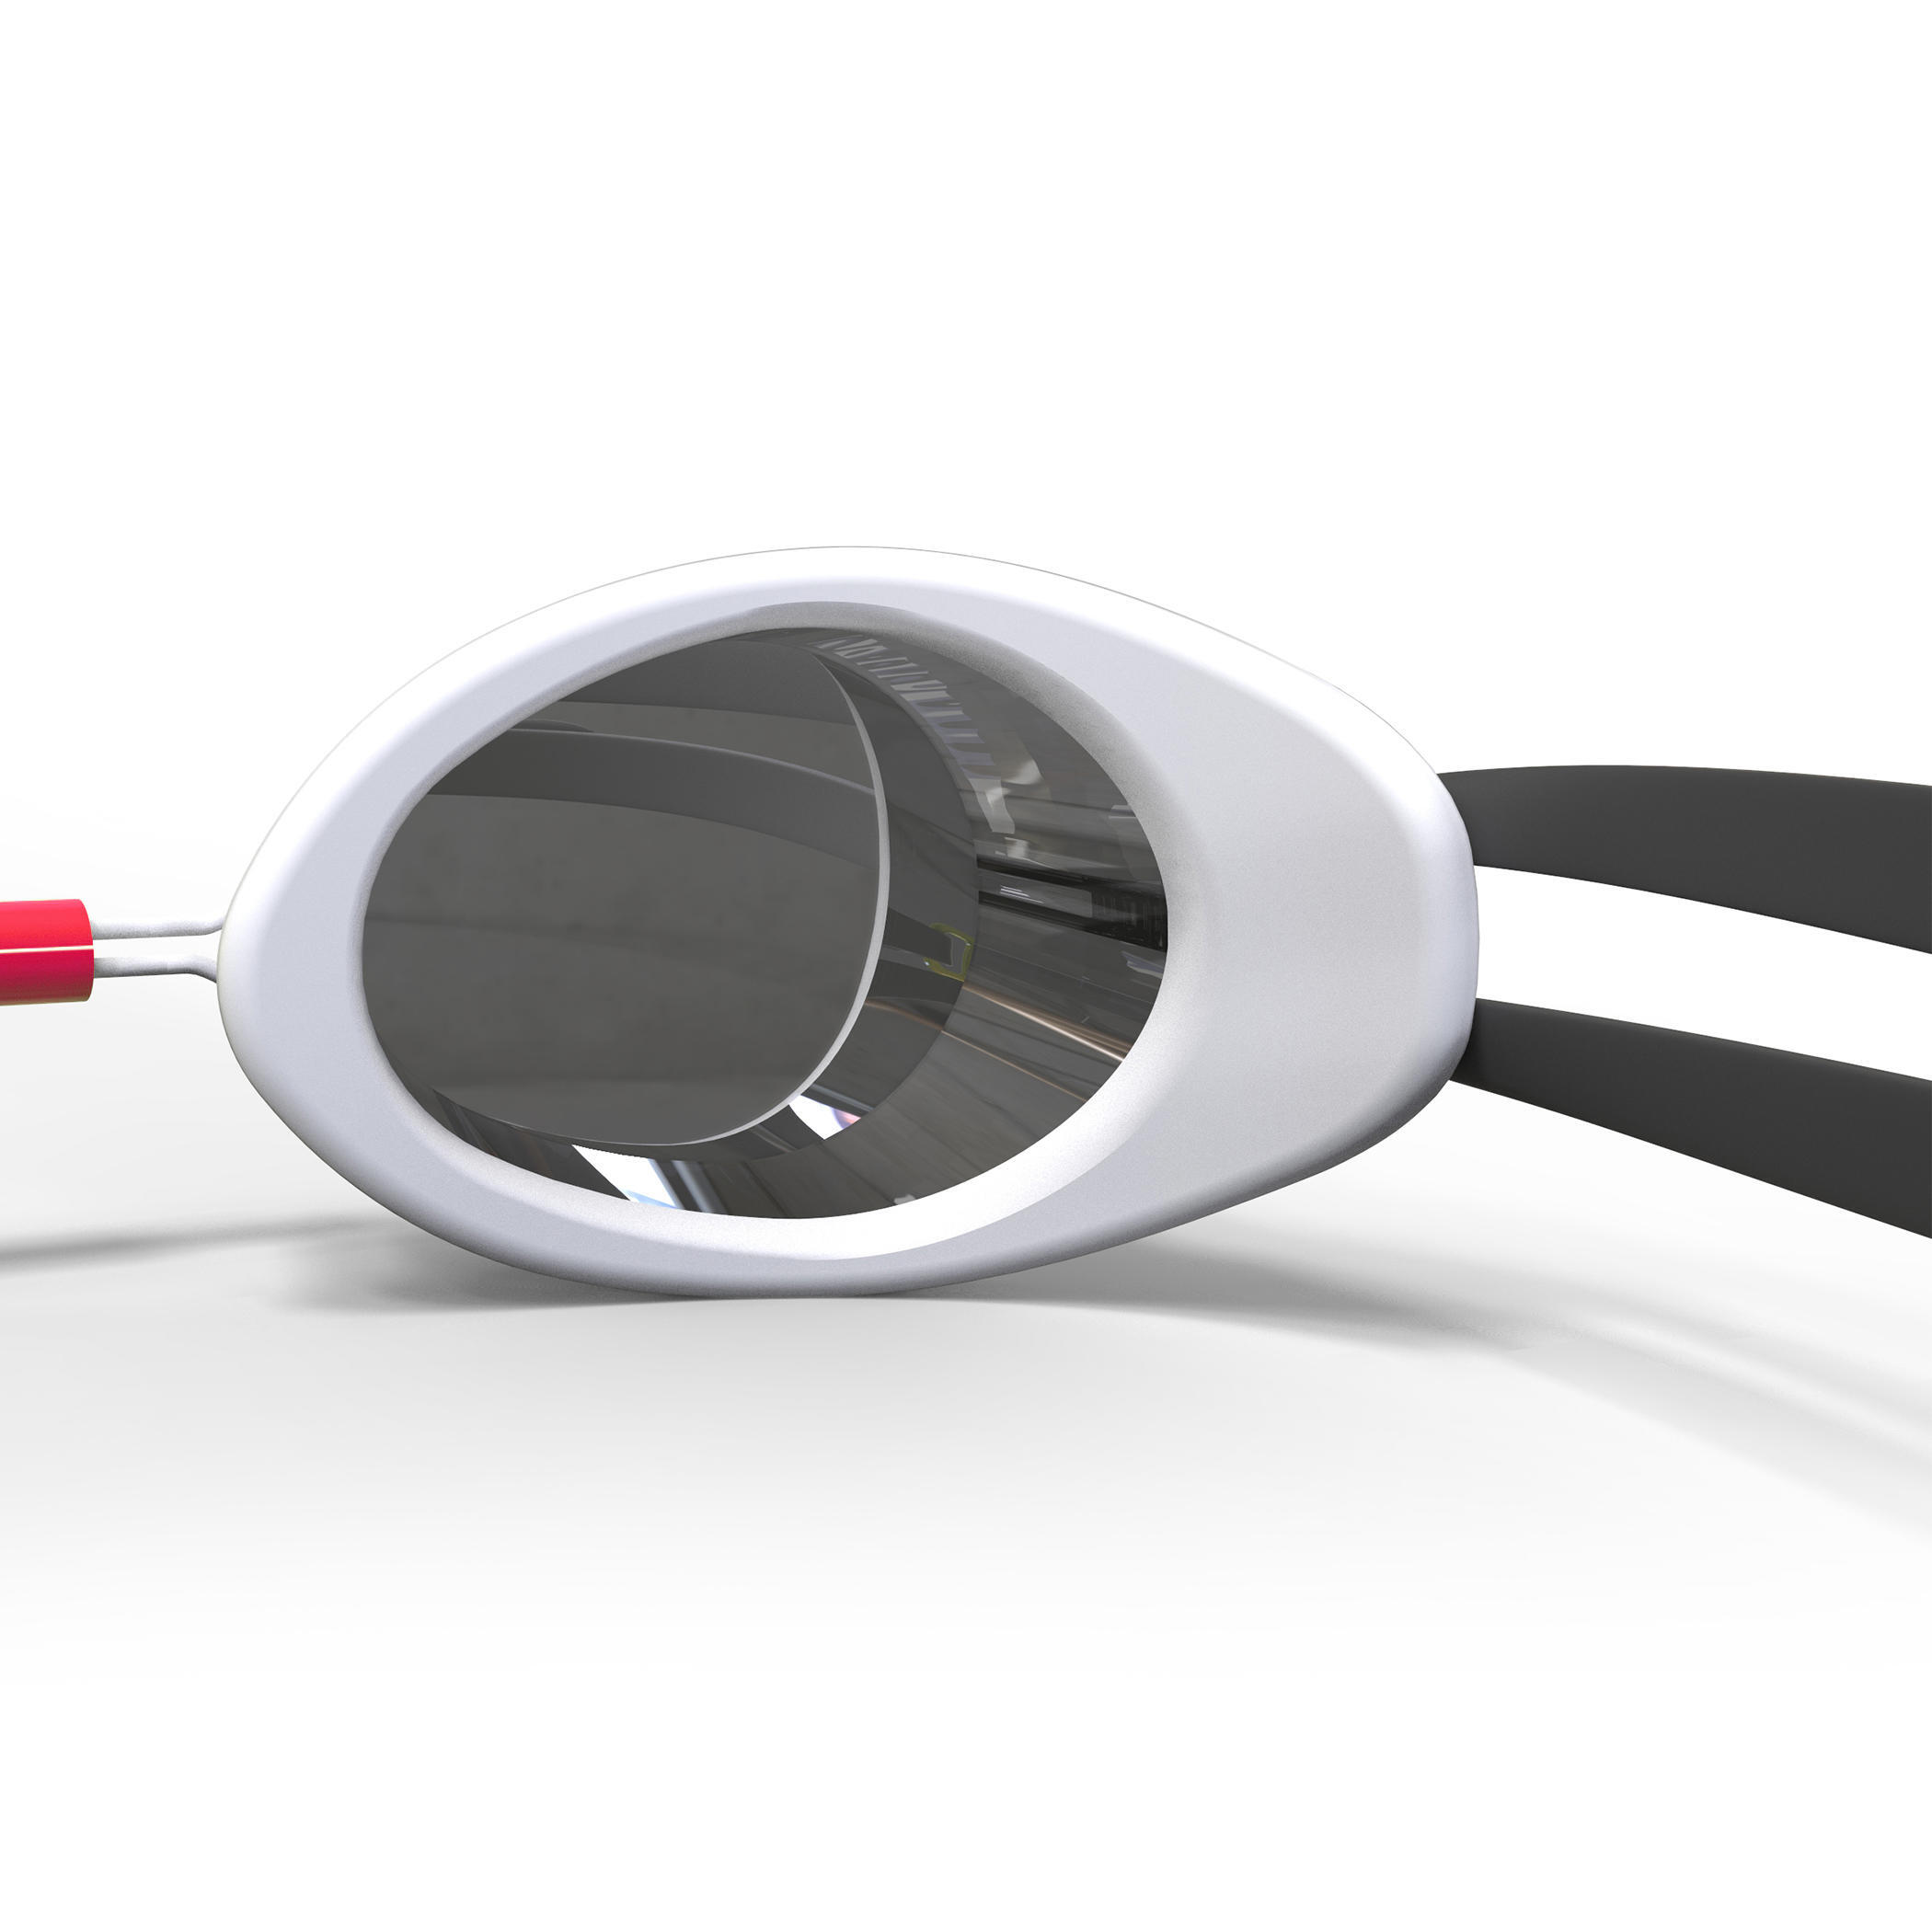 SWEDISH swimming goggles - Mirrored lenses - Single size - Black red 4/4